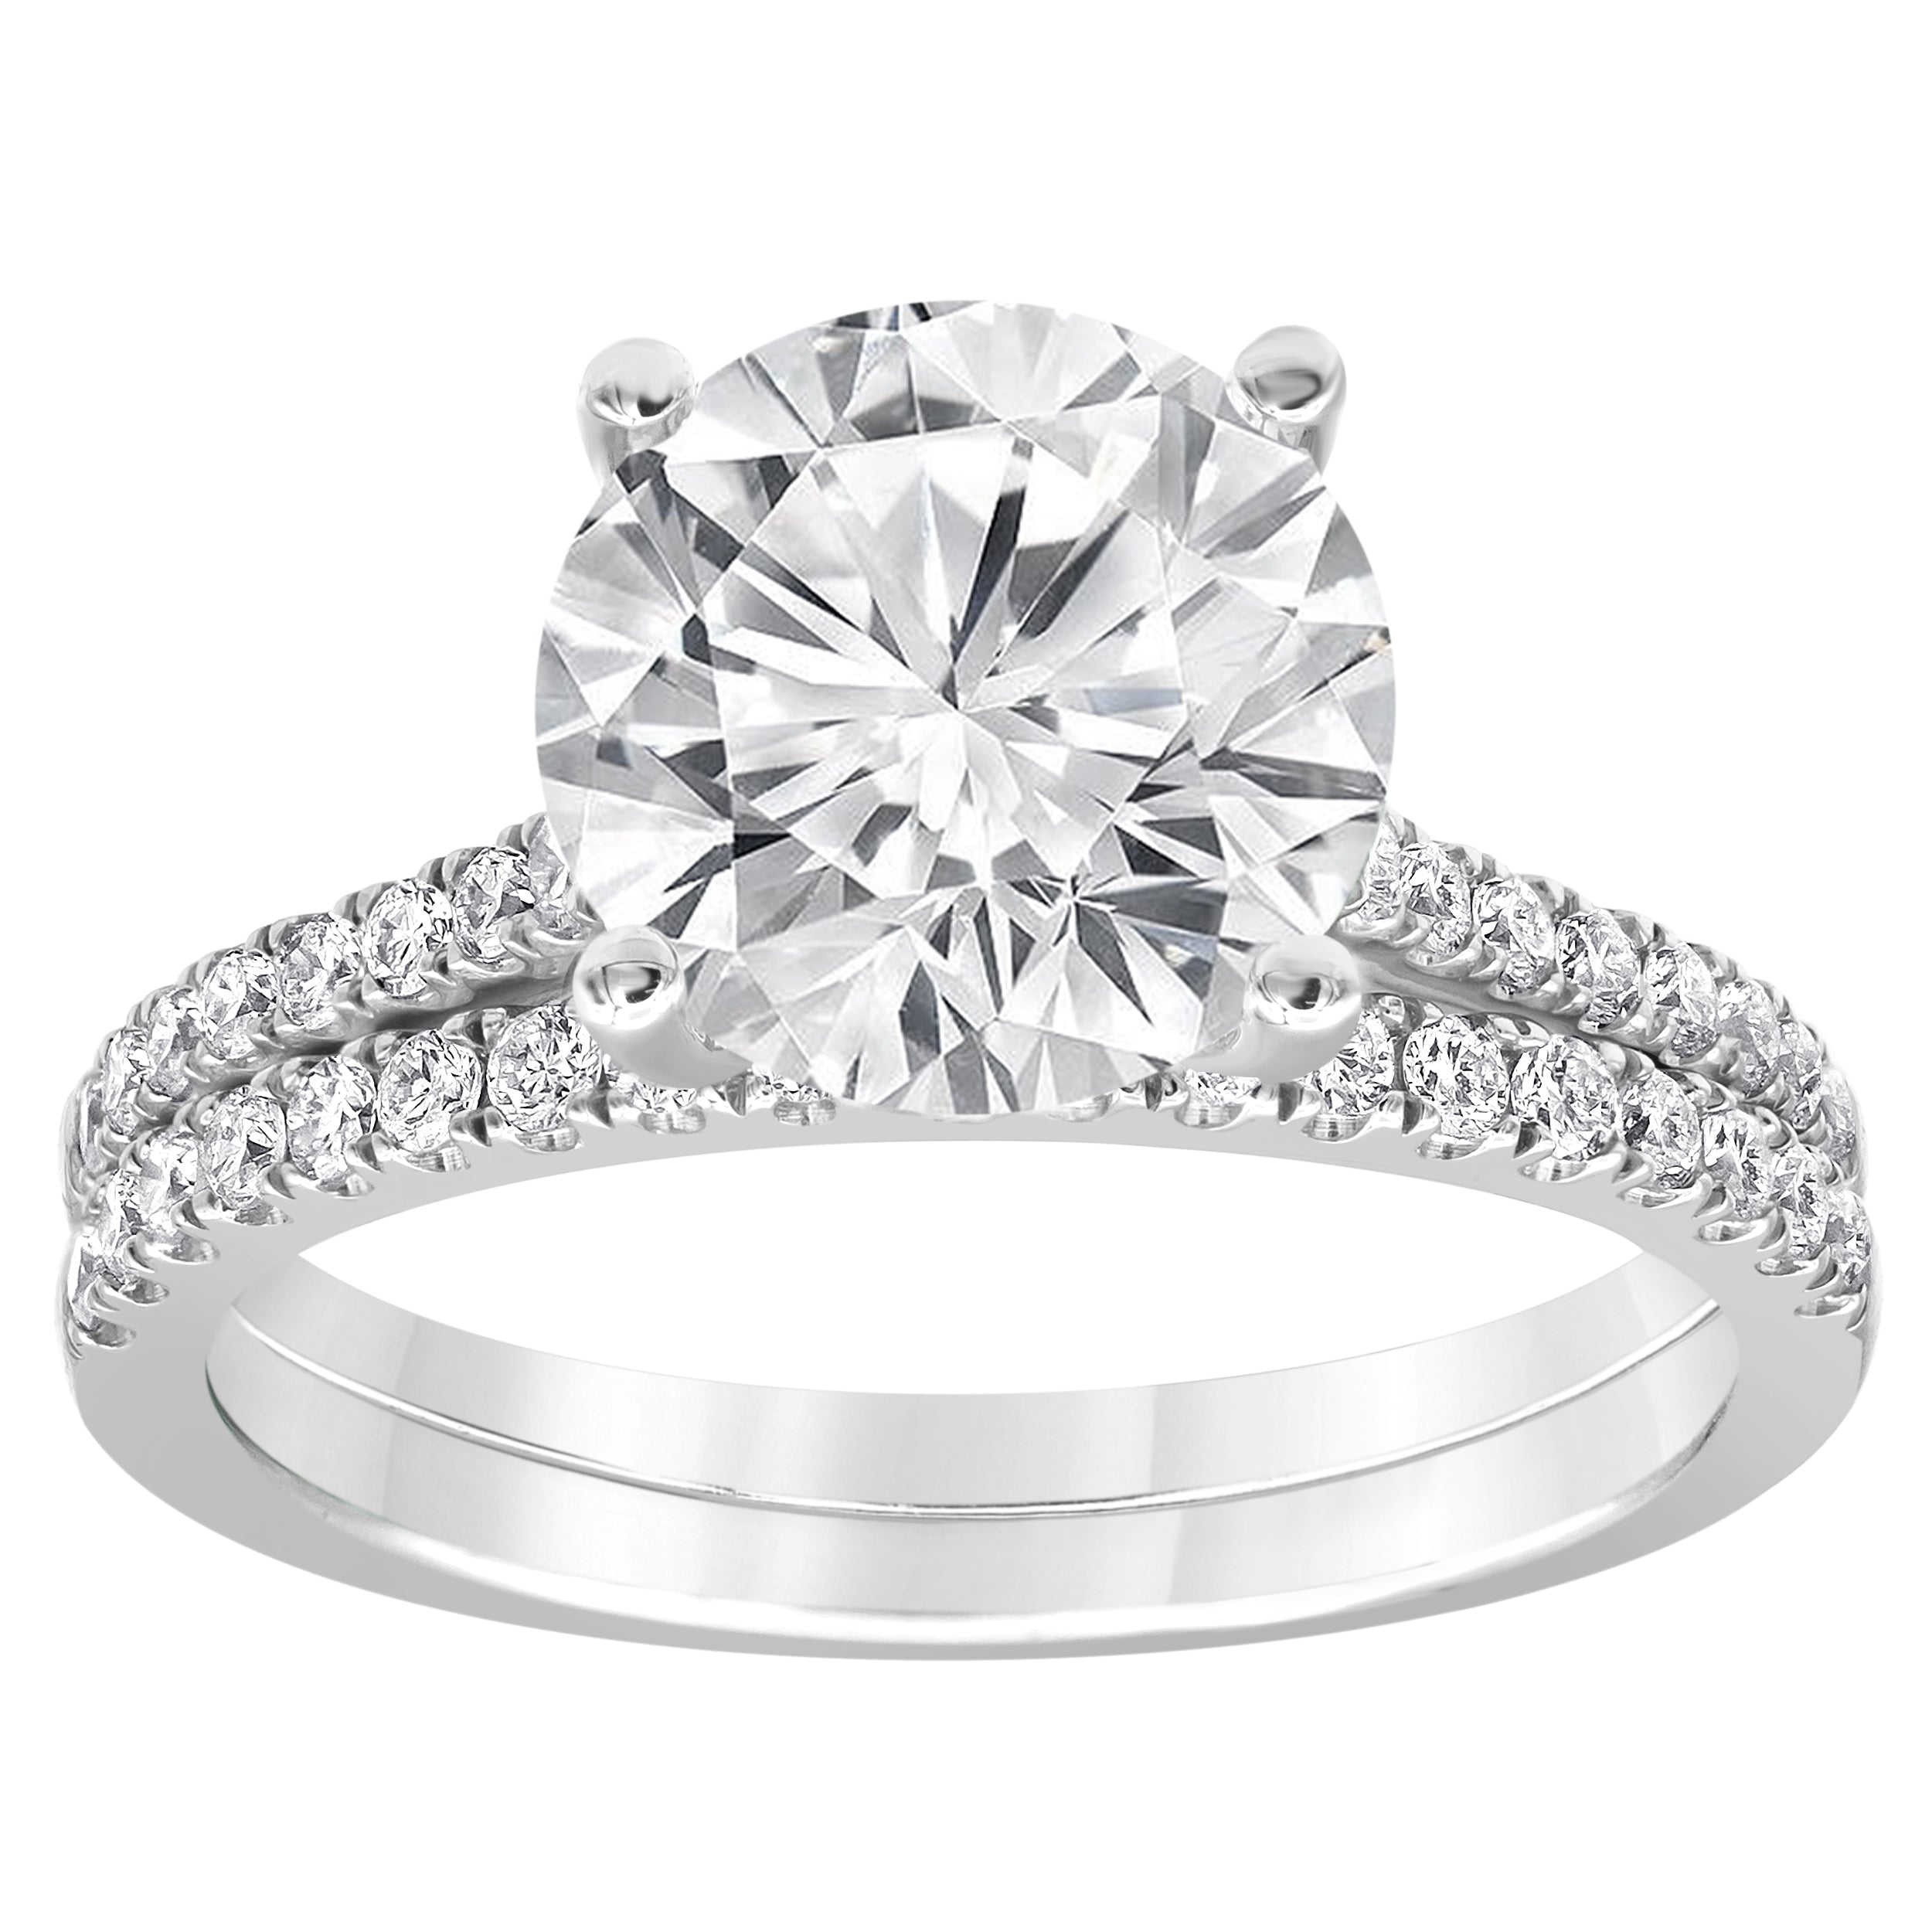 3.5 carat Round Hidden Halo Diamond Ring